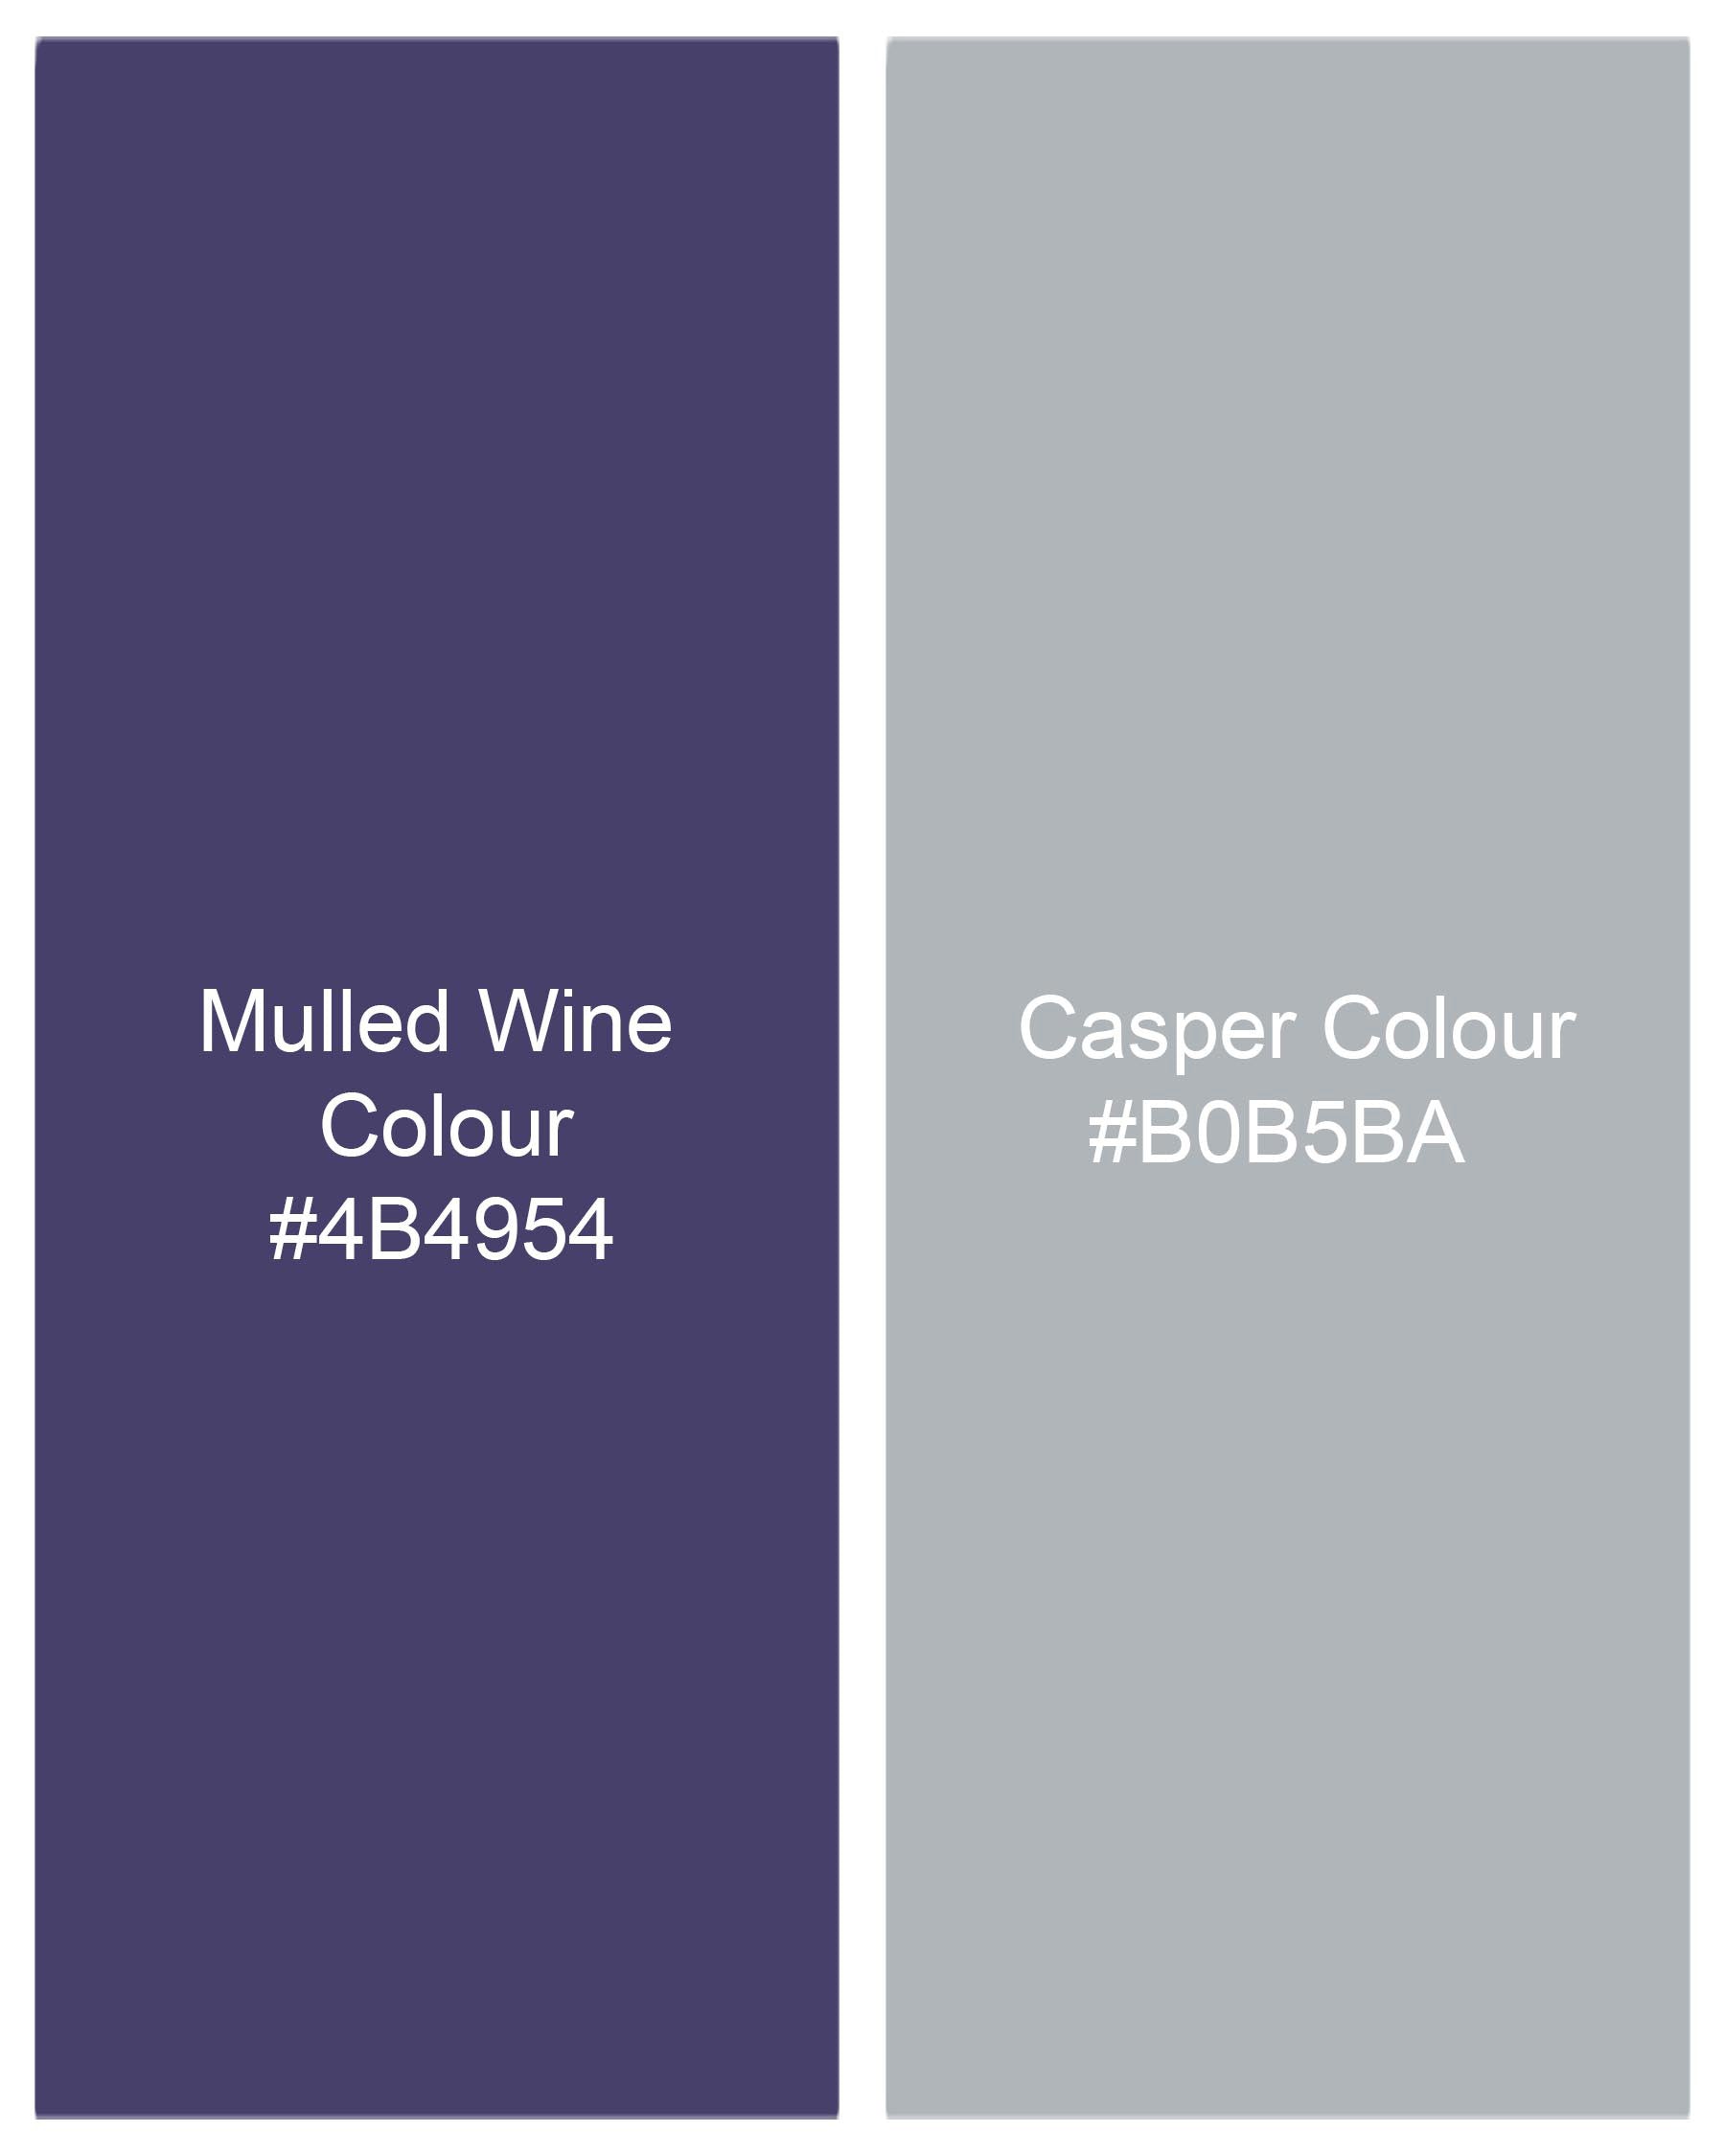 Mulled Wine Blue With Casper Gray Checkered Cross-Buttoned Bandhgala Blazer BL1976-CBG-36, BL1976-CBG-38, BL1976-CBG-40, BL1976-CBG-42, BL1976-CBG-44, BL1976-CBG-46, BL1976-CBG-48, BL1976-CBG-50, BL1976-CBG-52, BL1976-CBG-54, BL1976-CBG-56, BL1976-CBG-58, BL1976-CBG-60